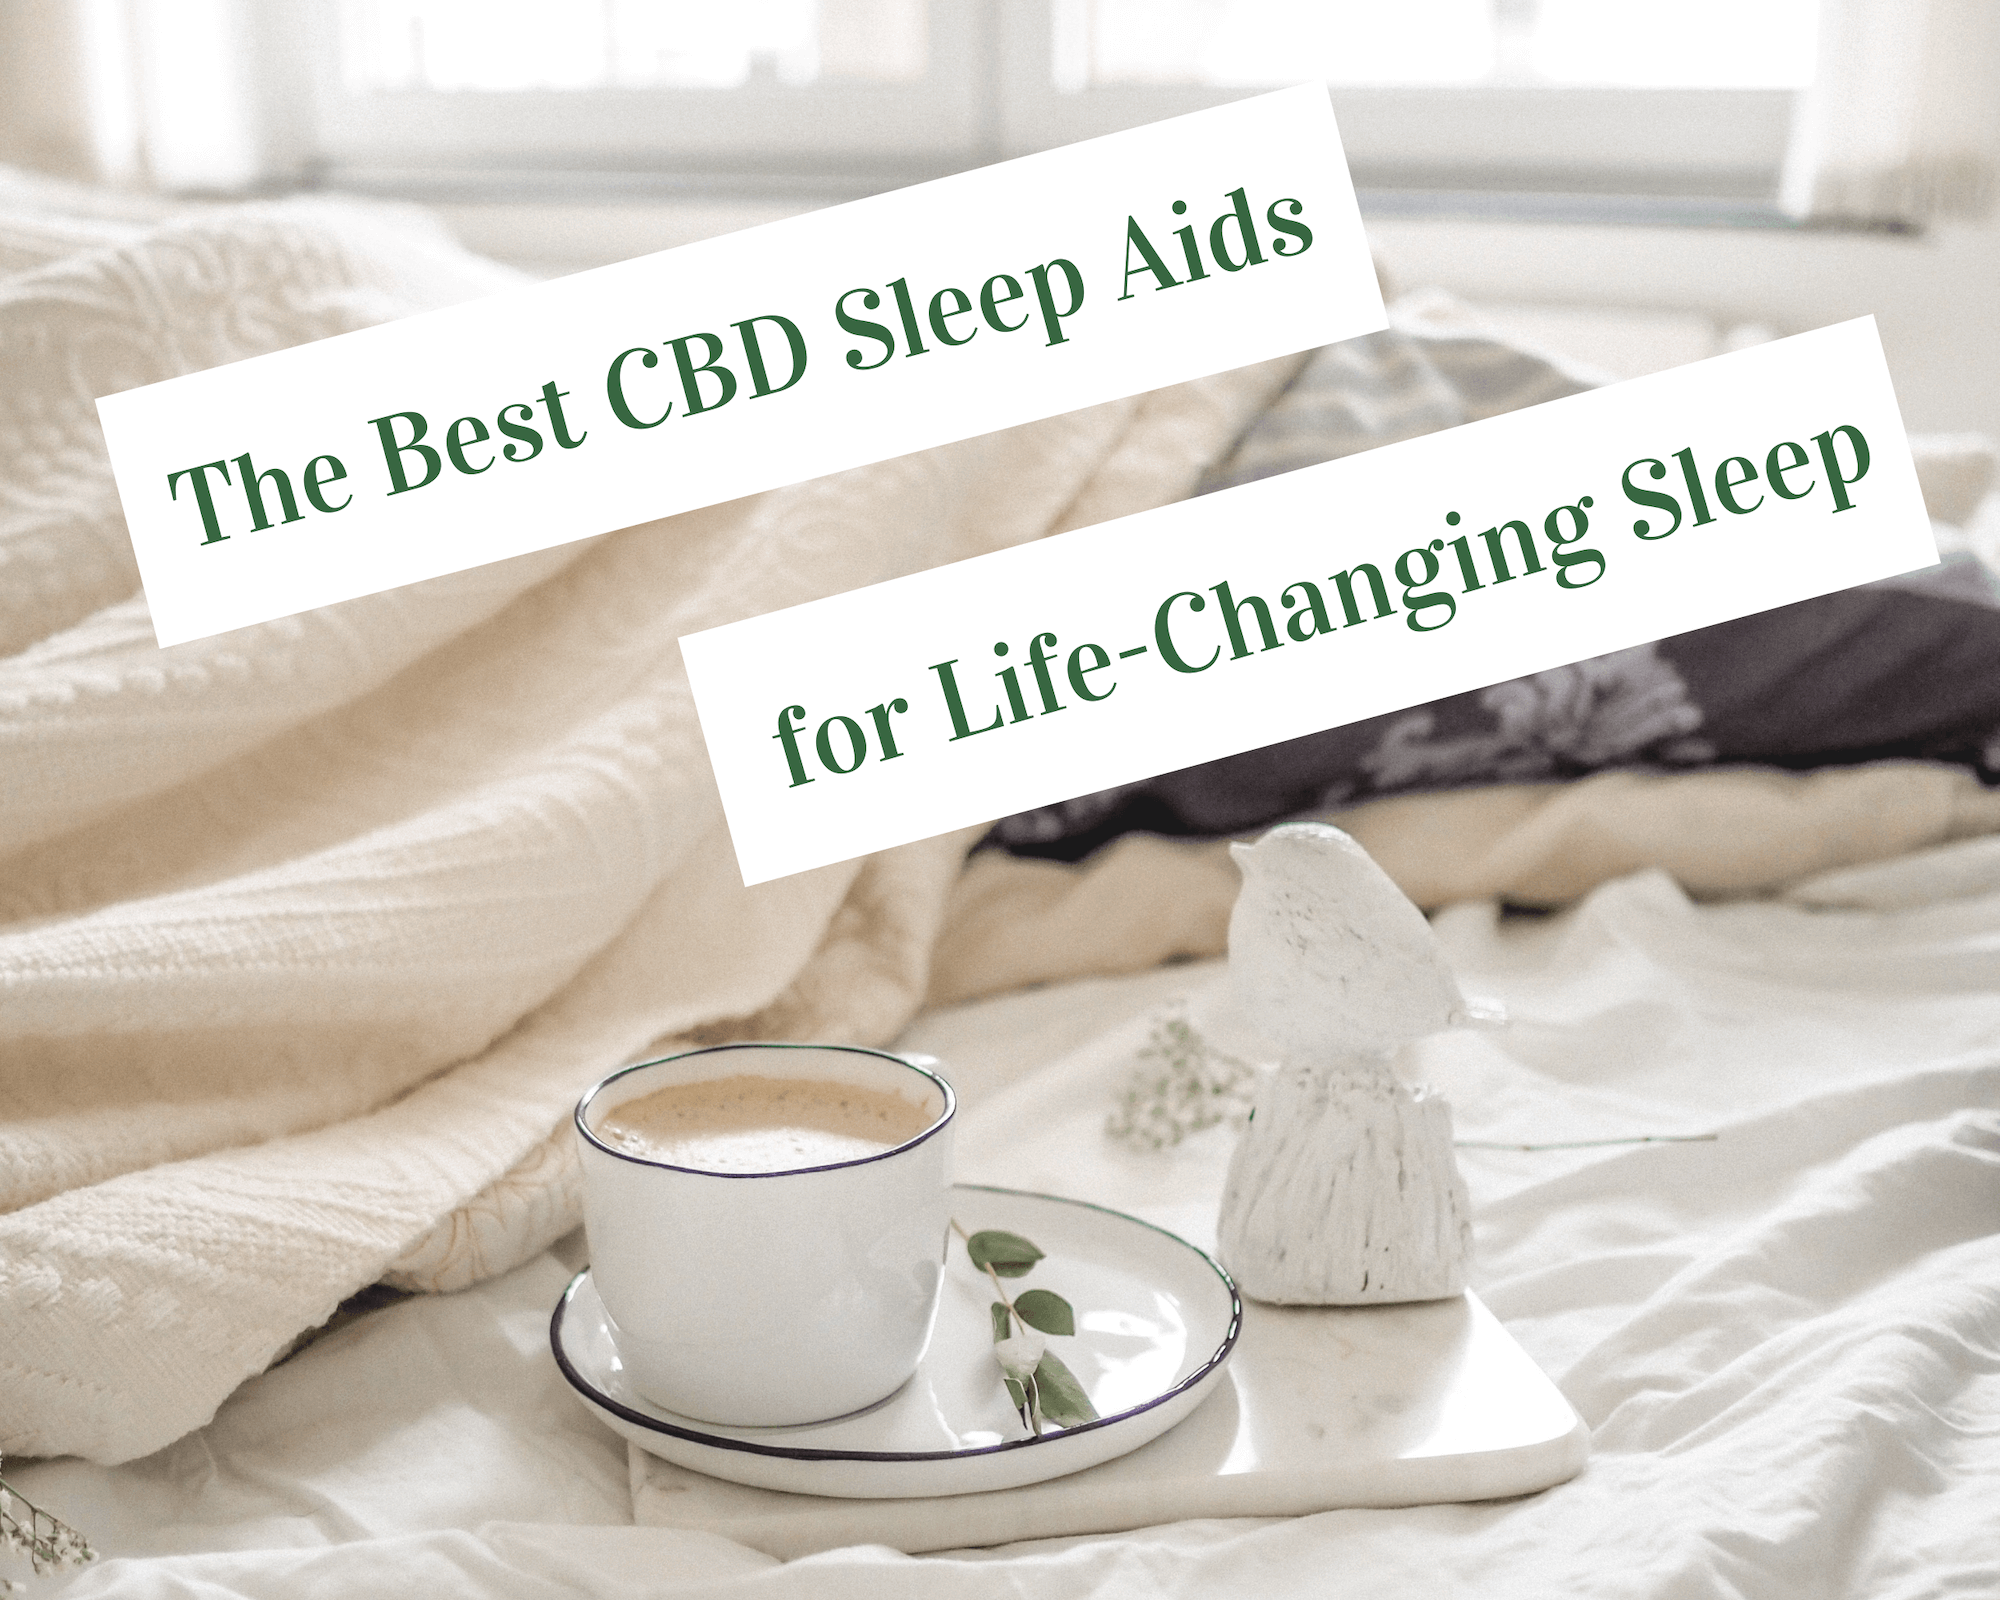 The best CBD sleep aids for life-changing sleep